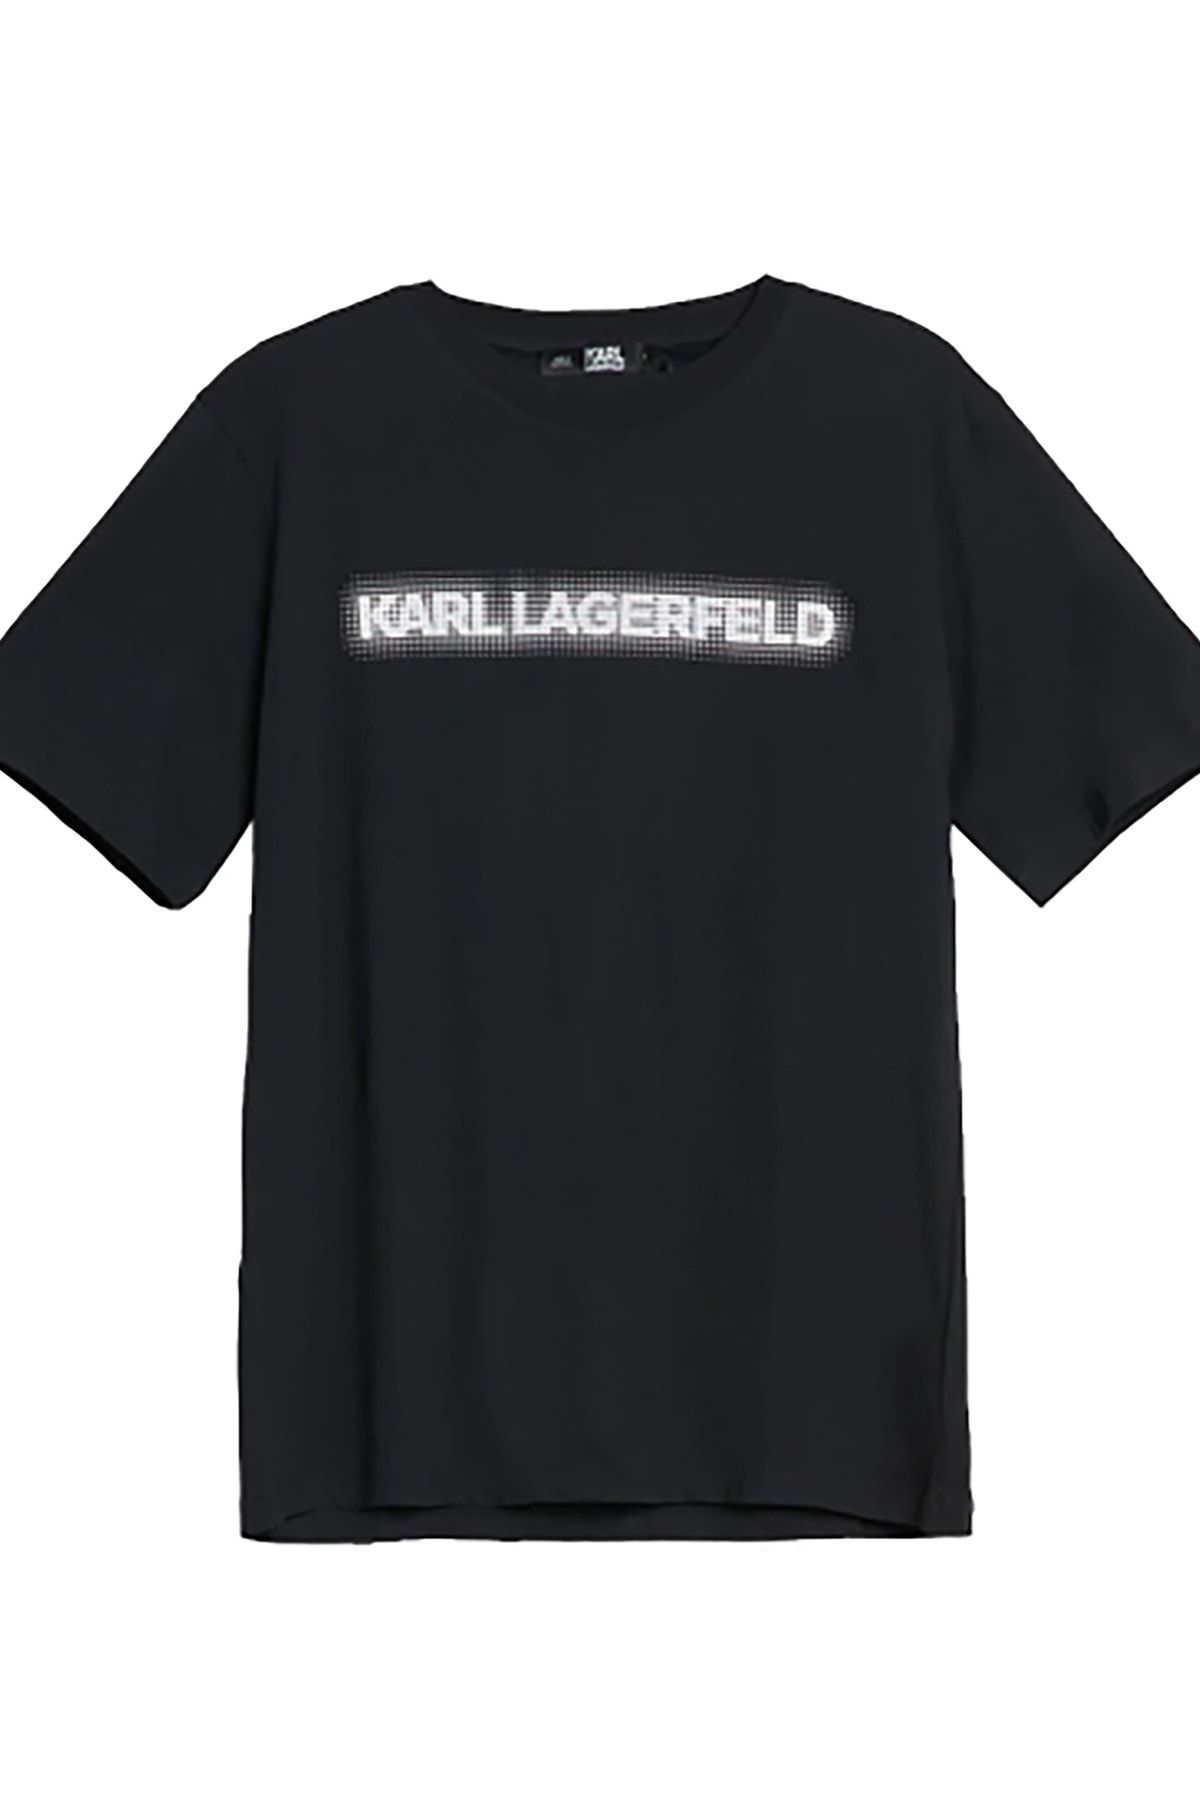 Karl Lagerfeld Bisiklet Yaka Baskılı Siyah Kadın T-Shirt 230W1782